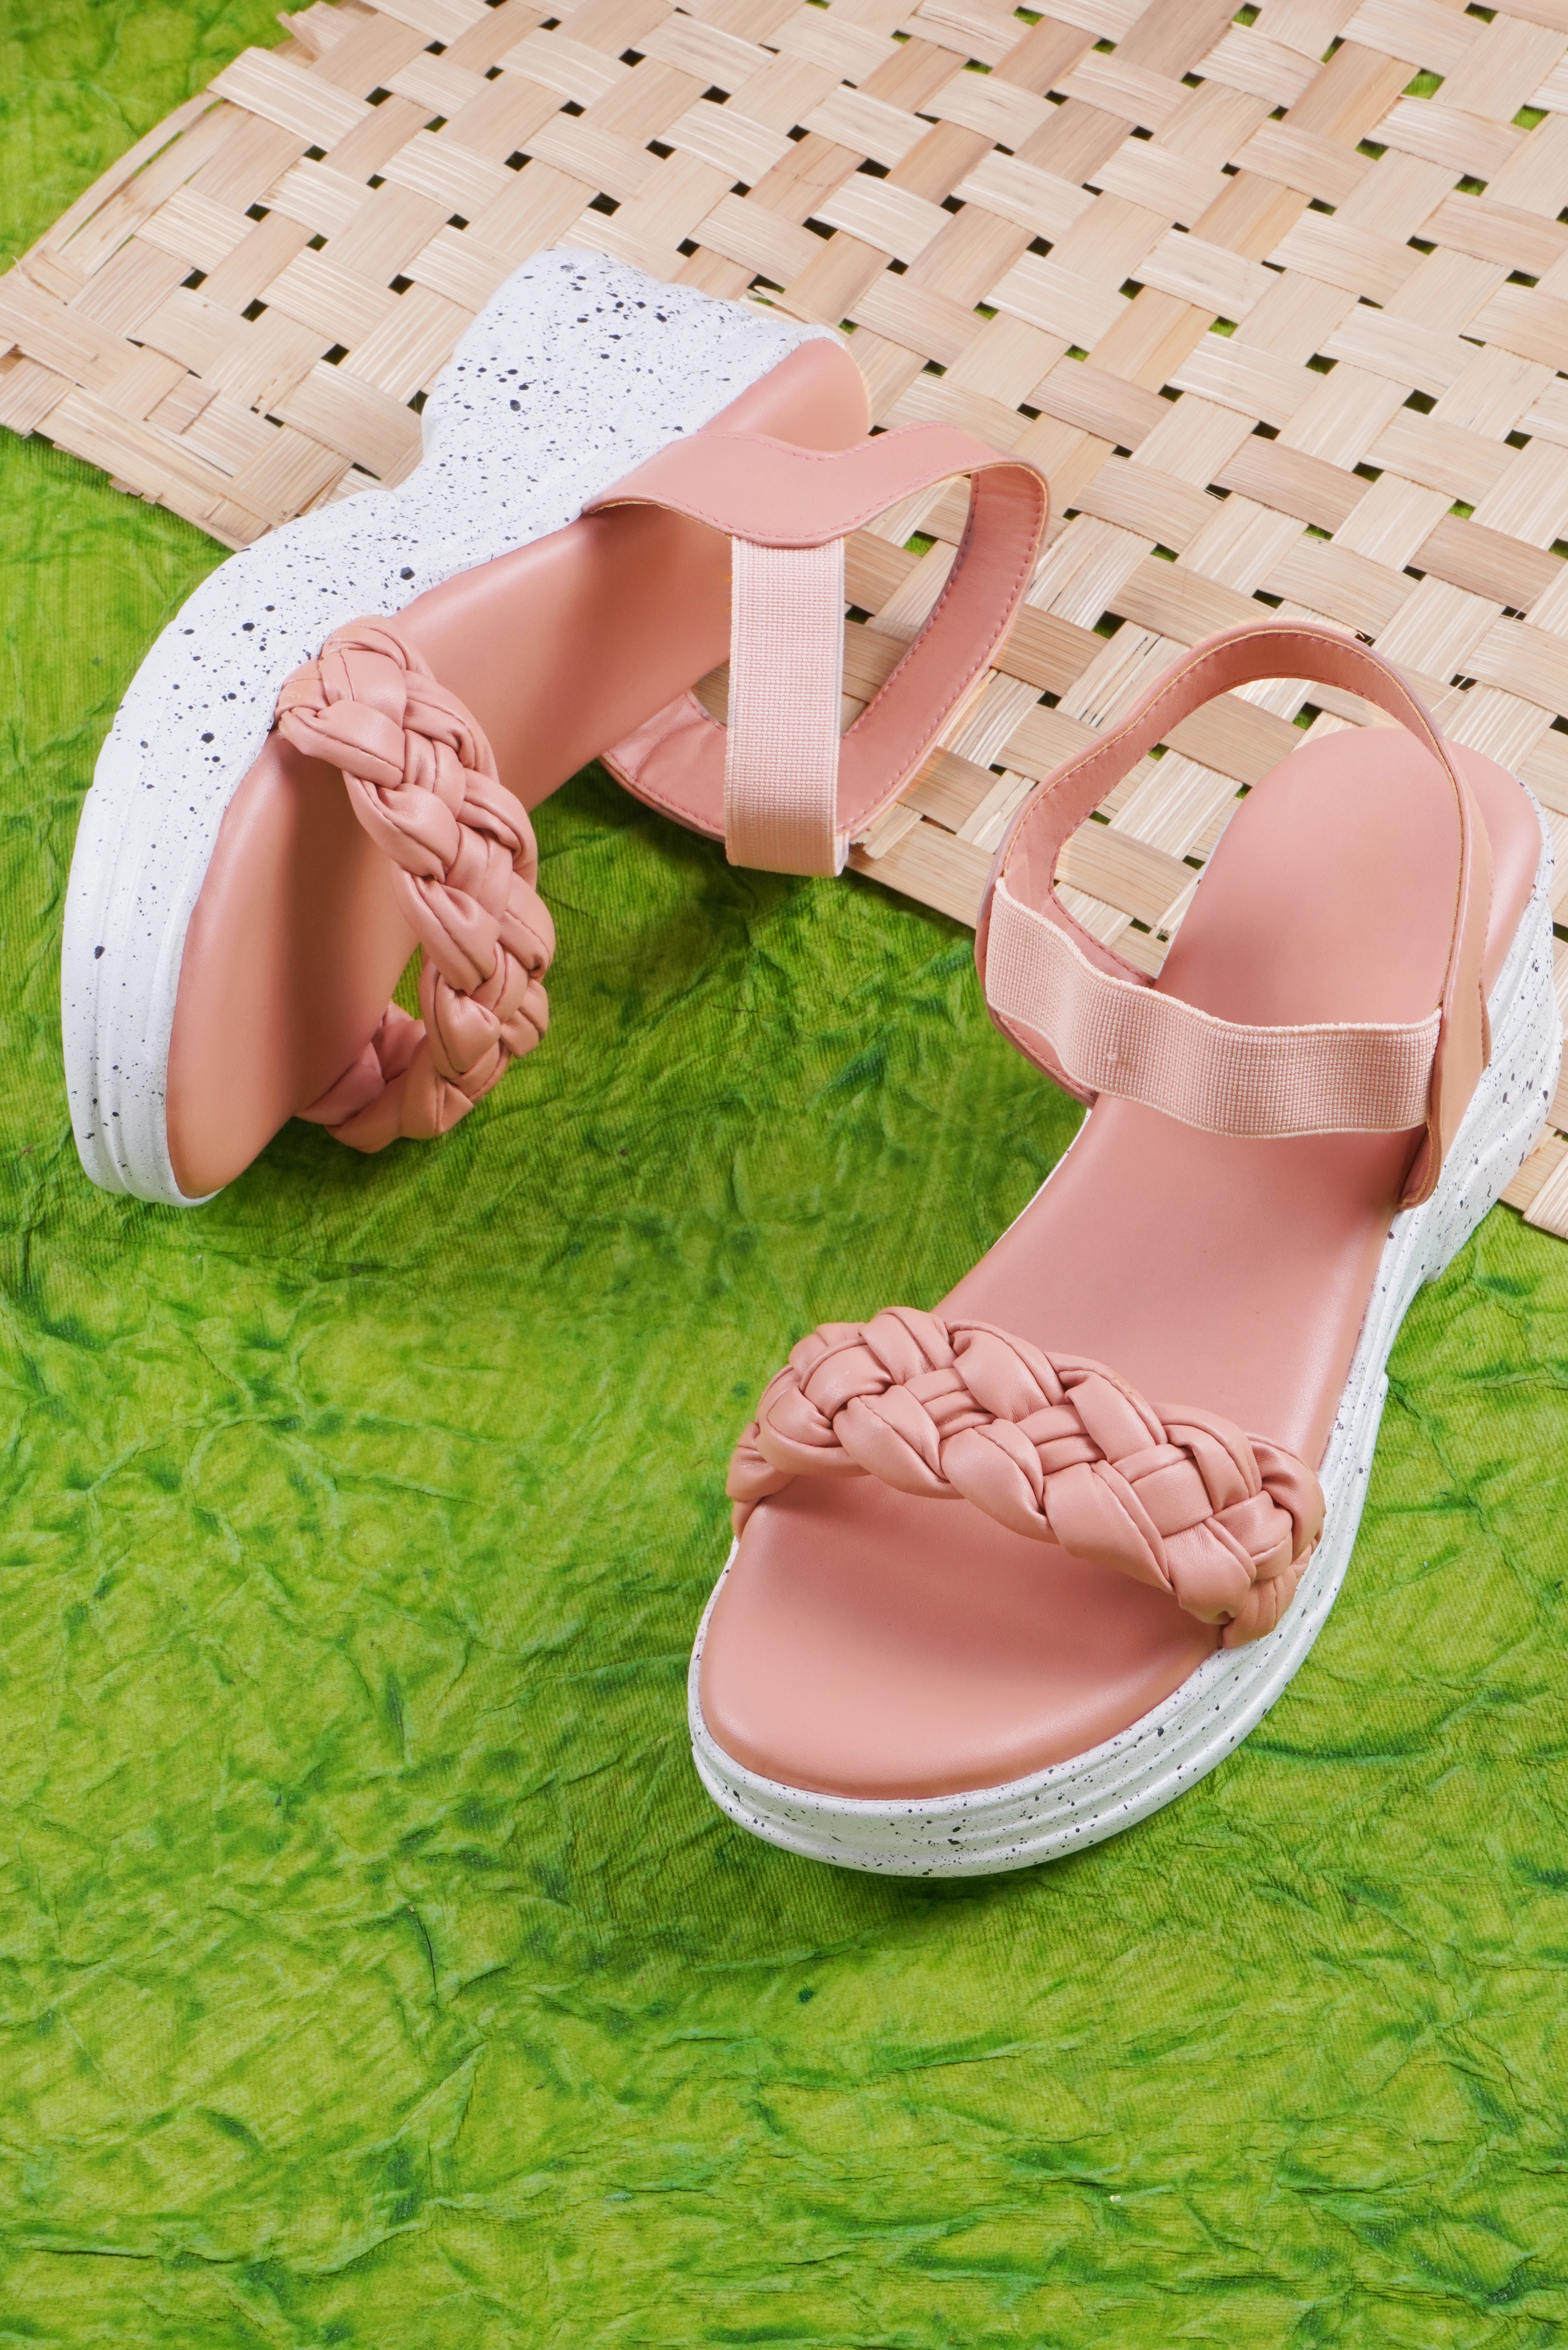 Urbanfeet Designer Floaters Sandals | Floaters Sandals for Baby Girls